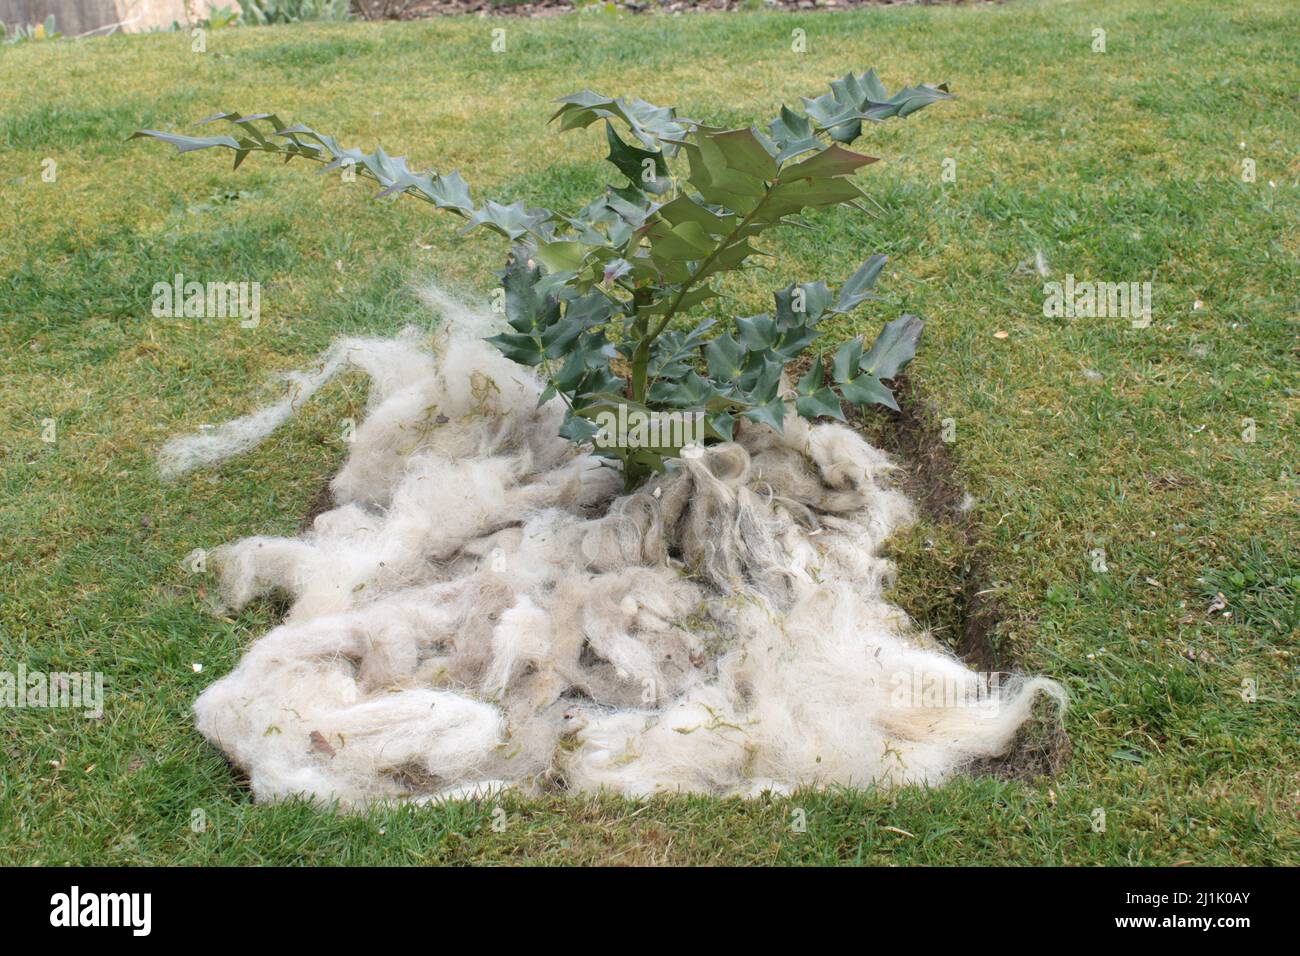 Lana de oveja utilizada como pajote natural alrededor de una planta Foto de stock